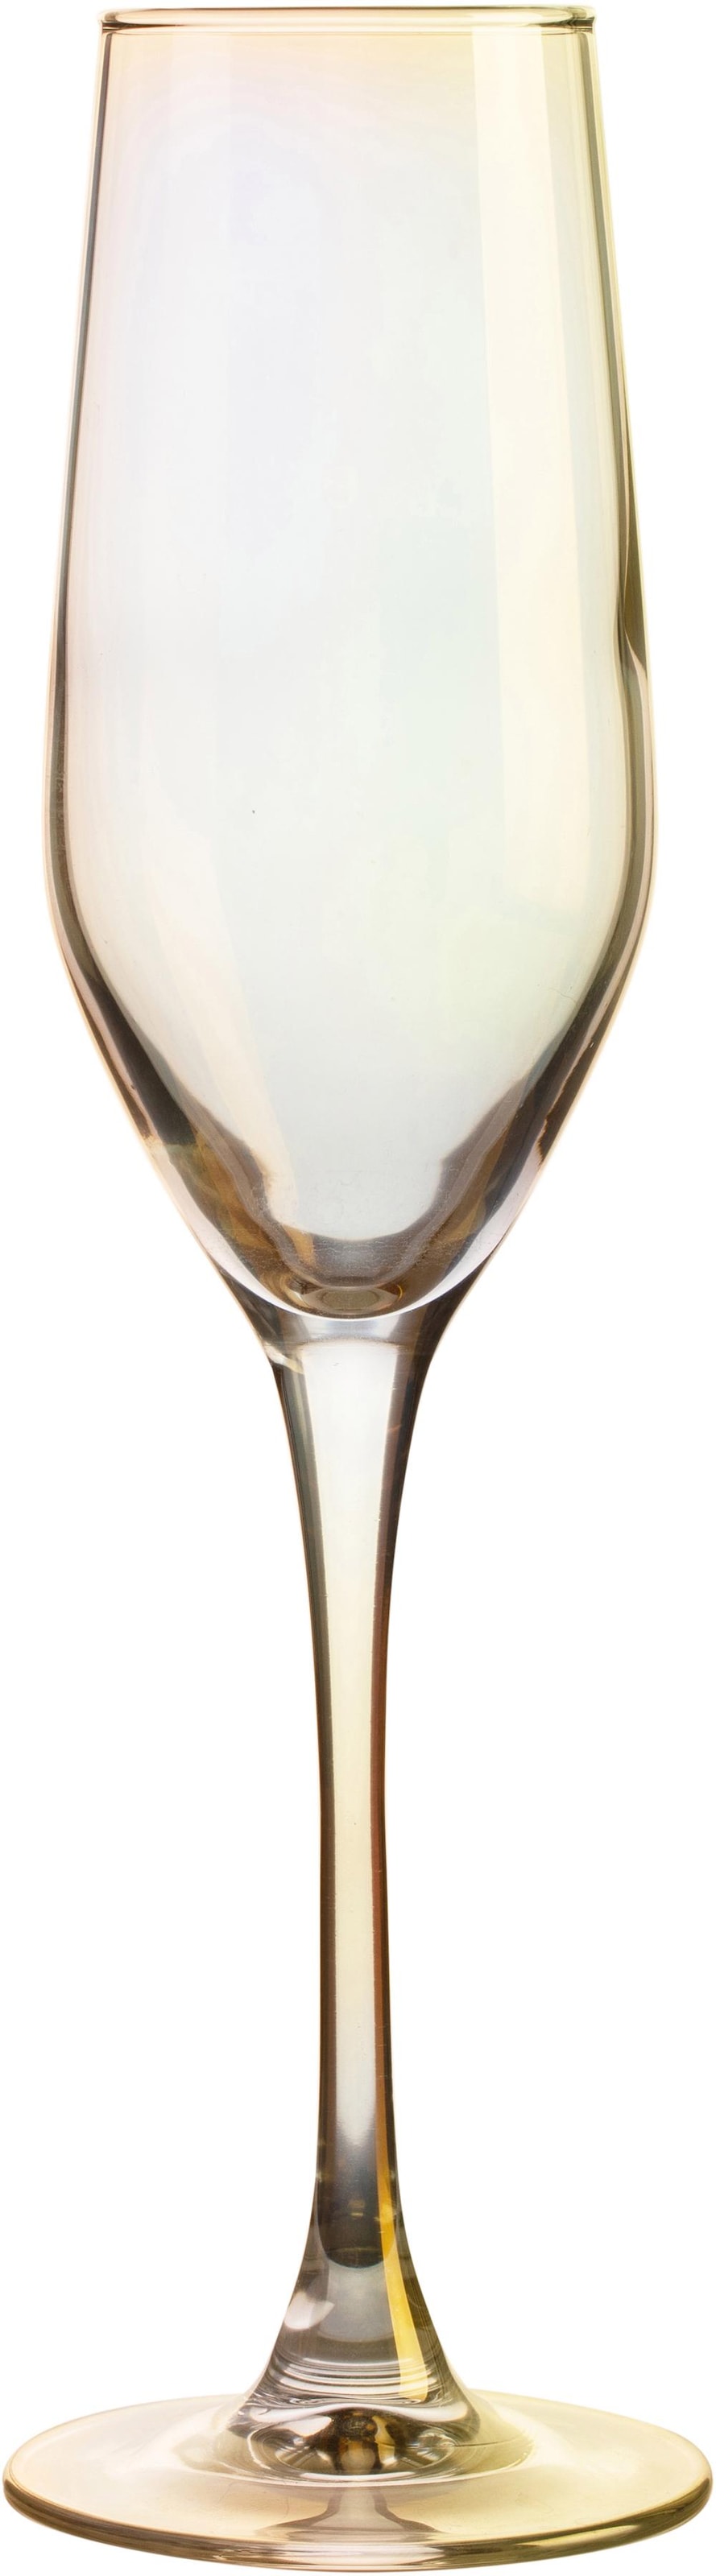 Luminarc Sektglas »Trinkglas Shiny«, (Set, 4 tlg.), Gläser Set, farblich beschichtet, 4-teilig